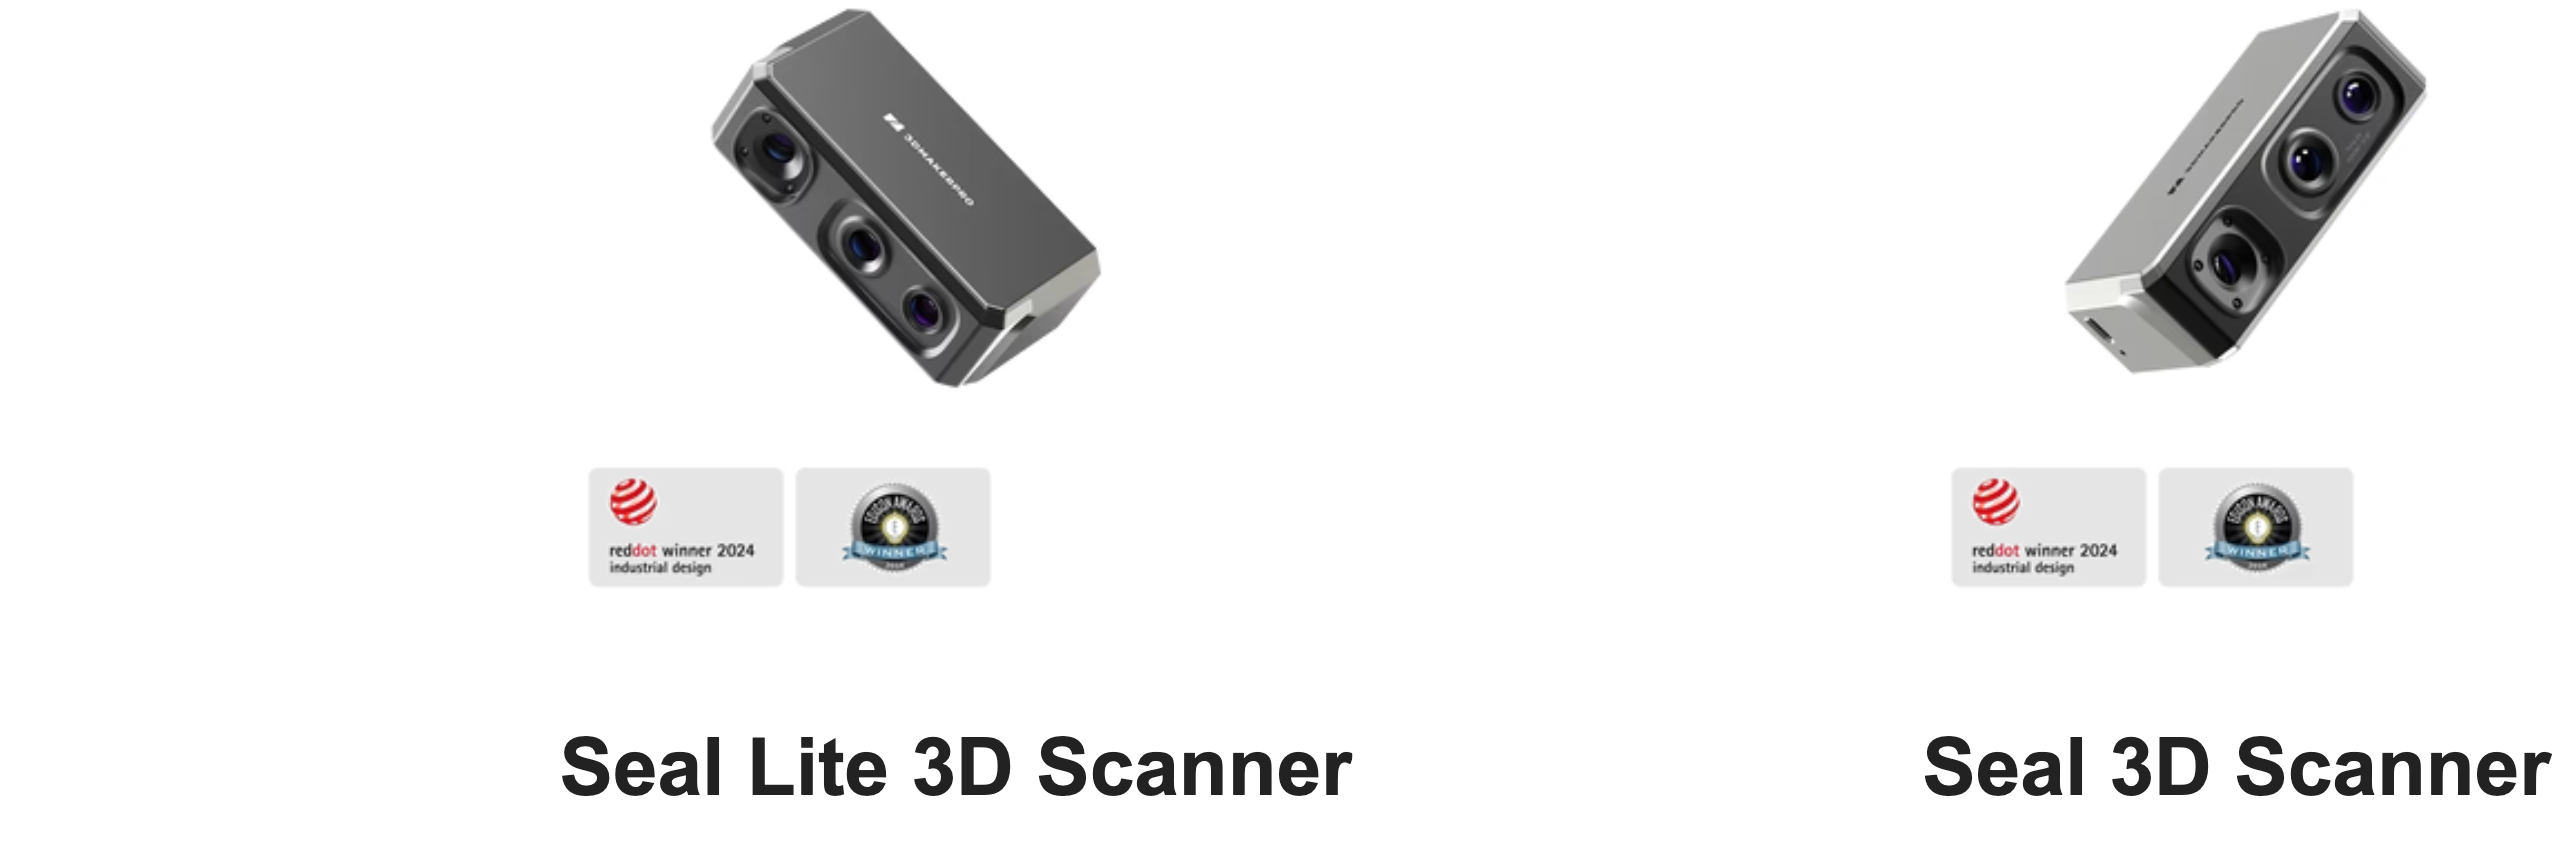 3DMakerPro_Seal_Lite_3D_Scanner_Description_12